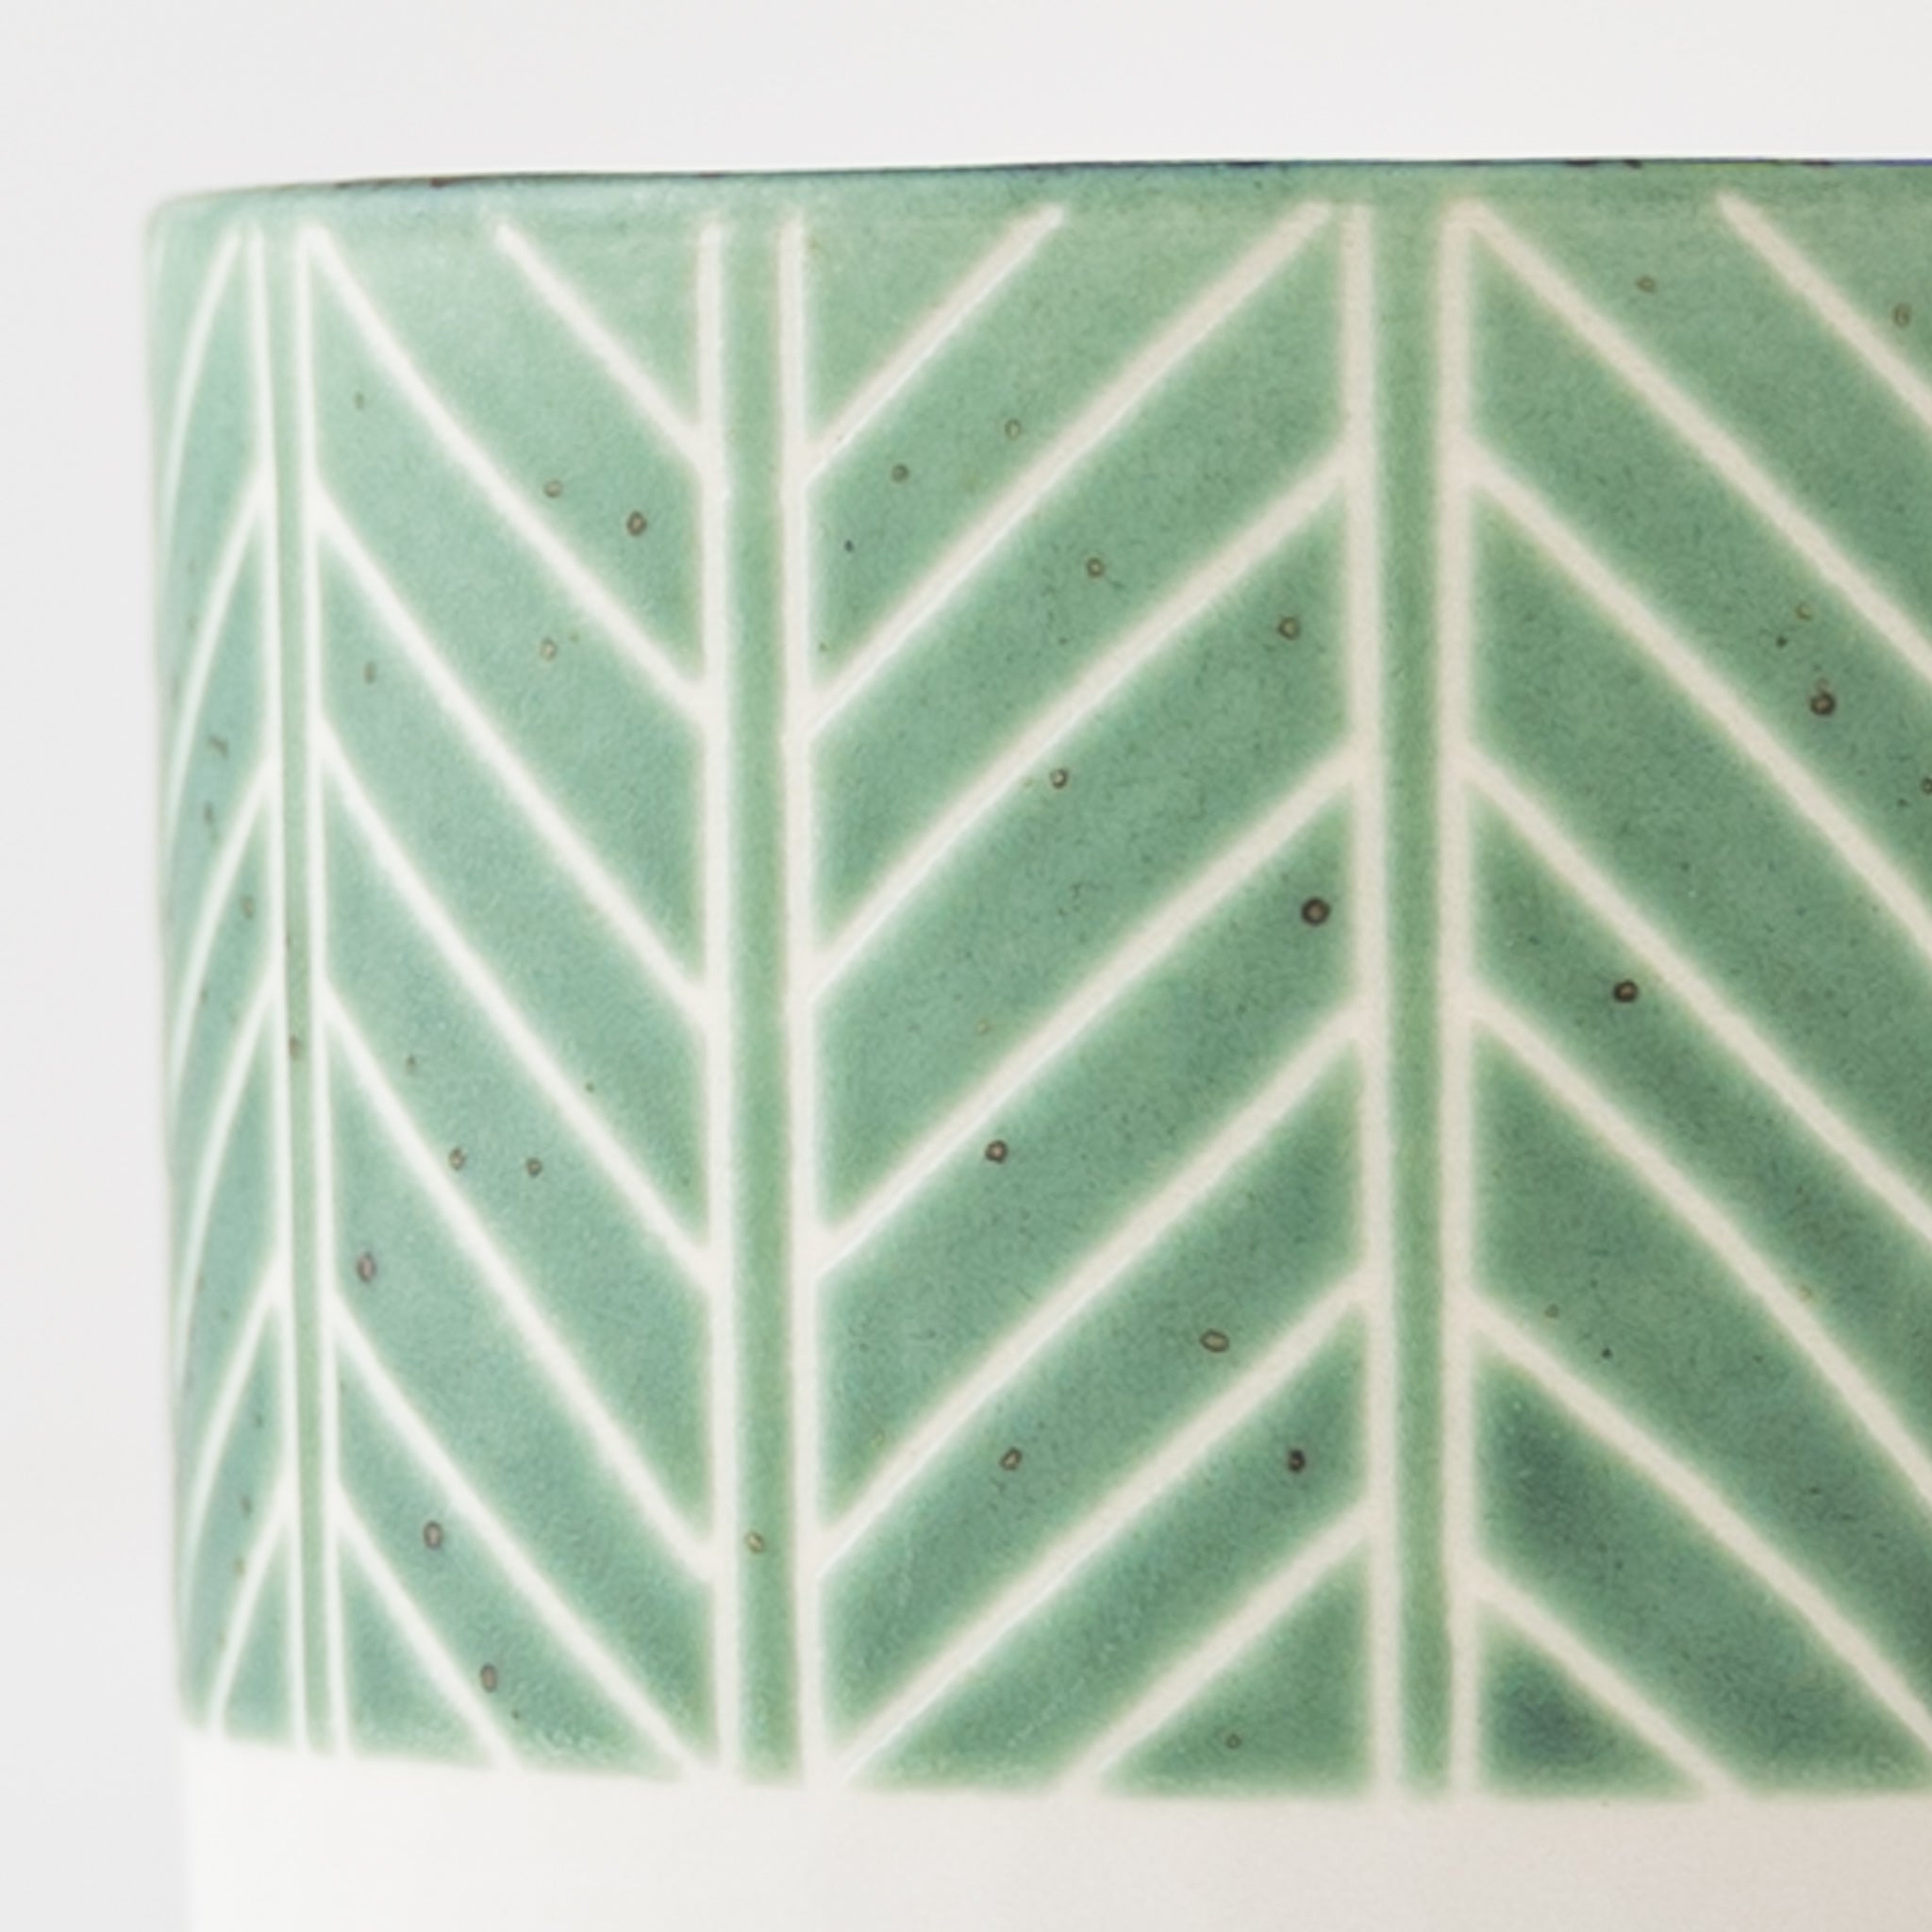 Yukari Nakagawa's mug with lovely herringbone and green hues